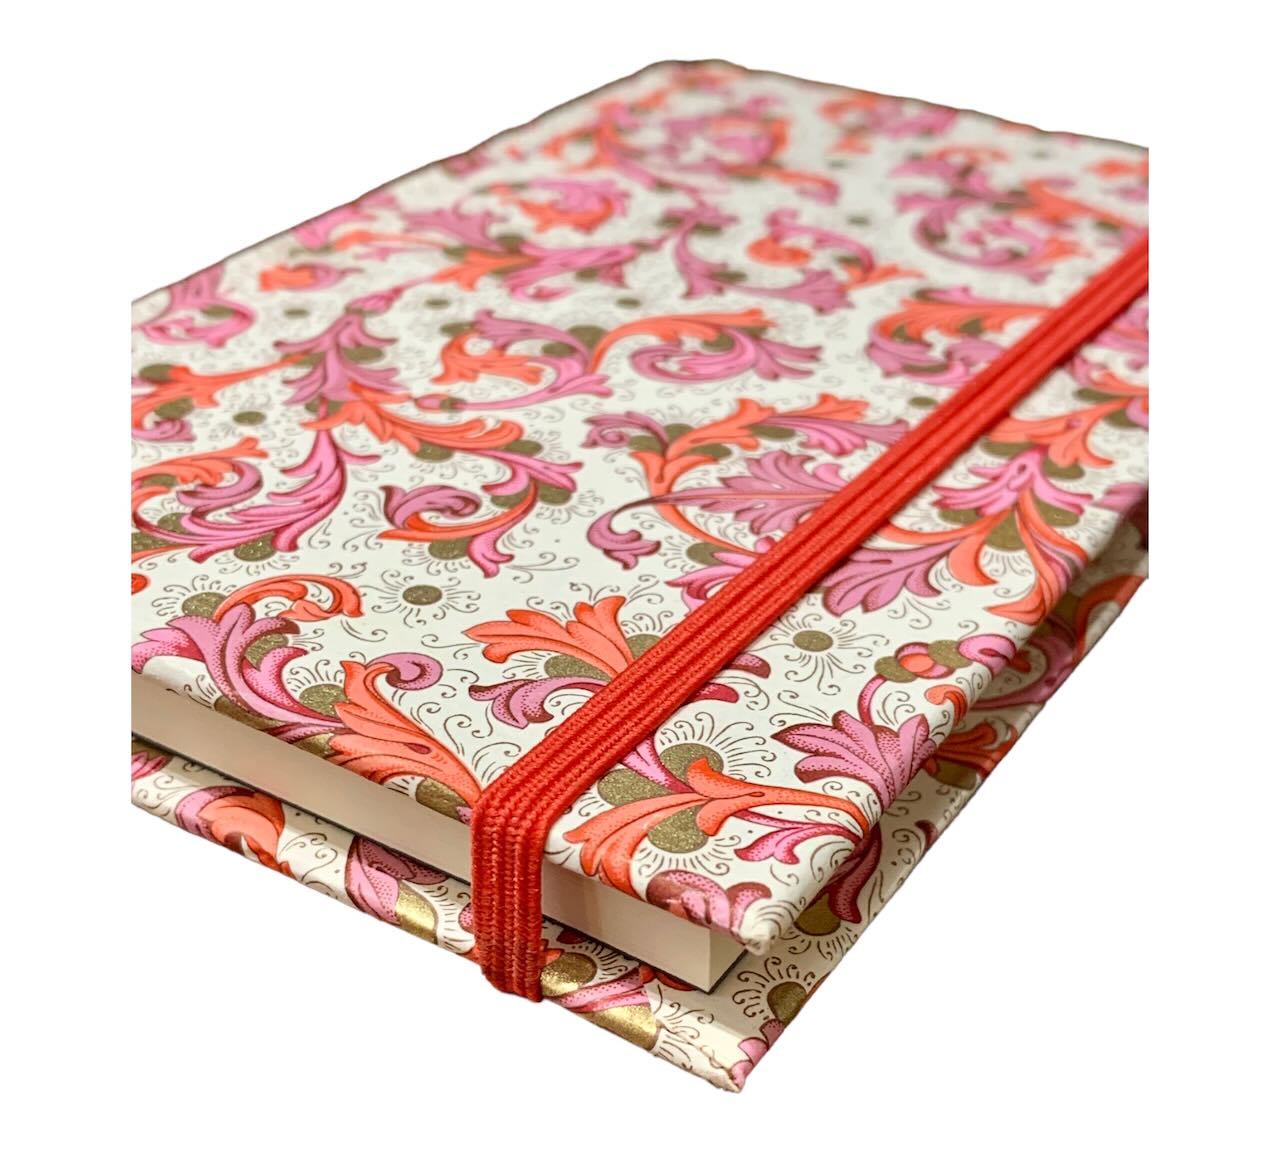 Notizbuch 10x15cm in edlem Florenzpapier gebunden florales Muster rosa pink